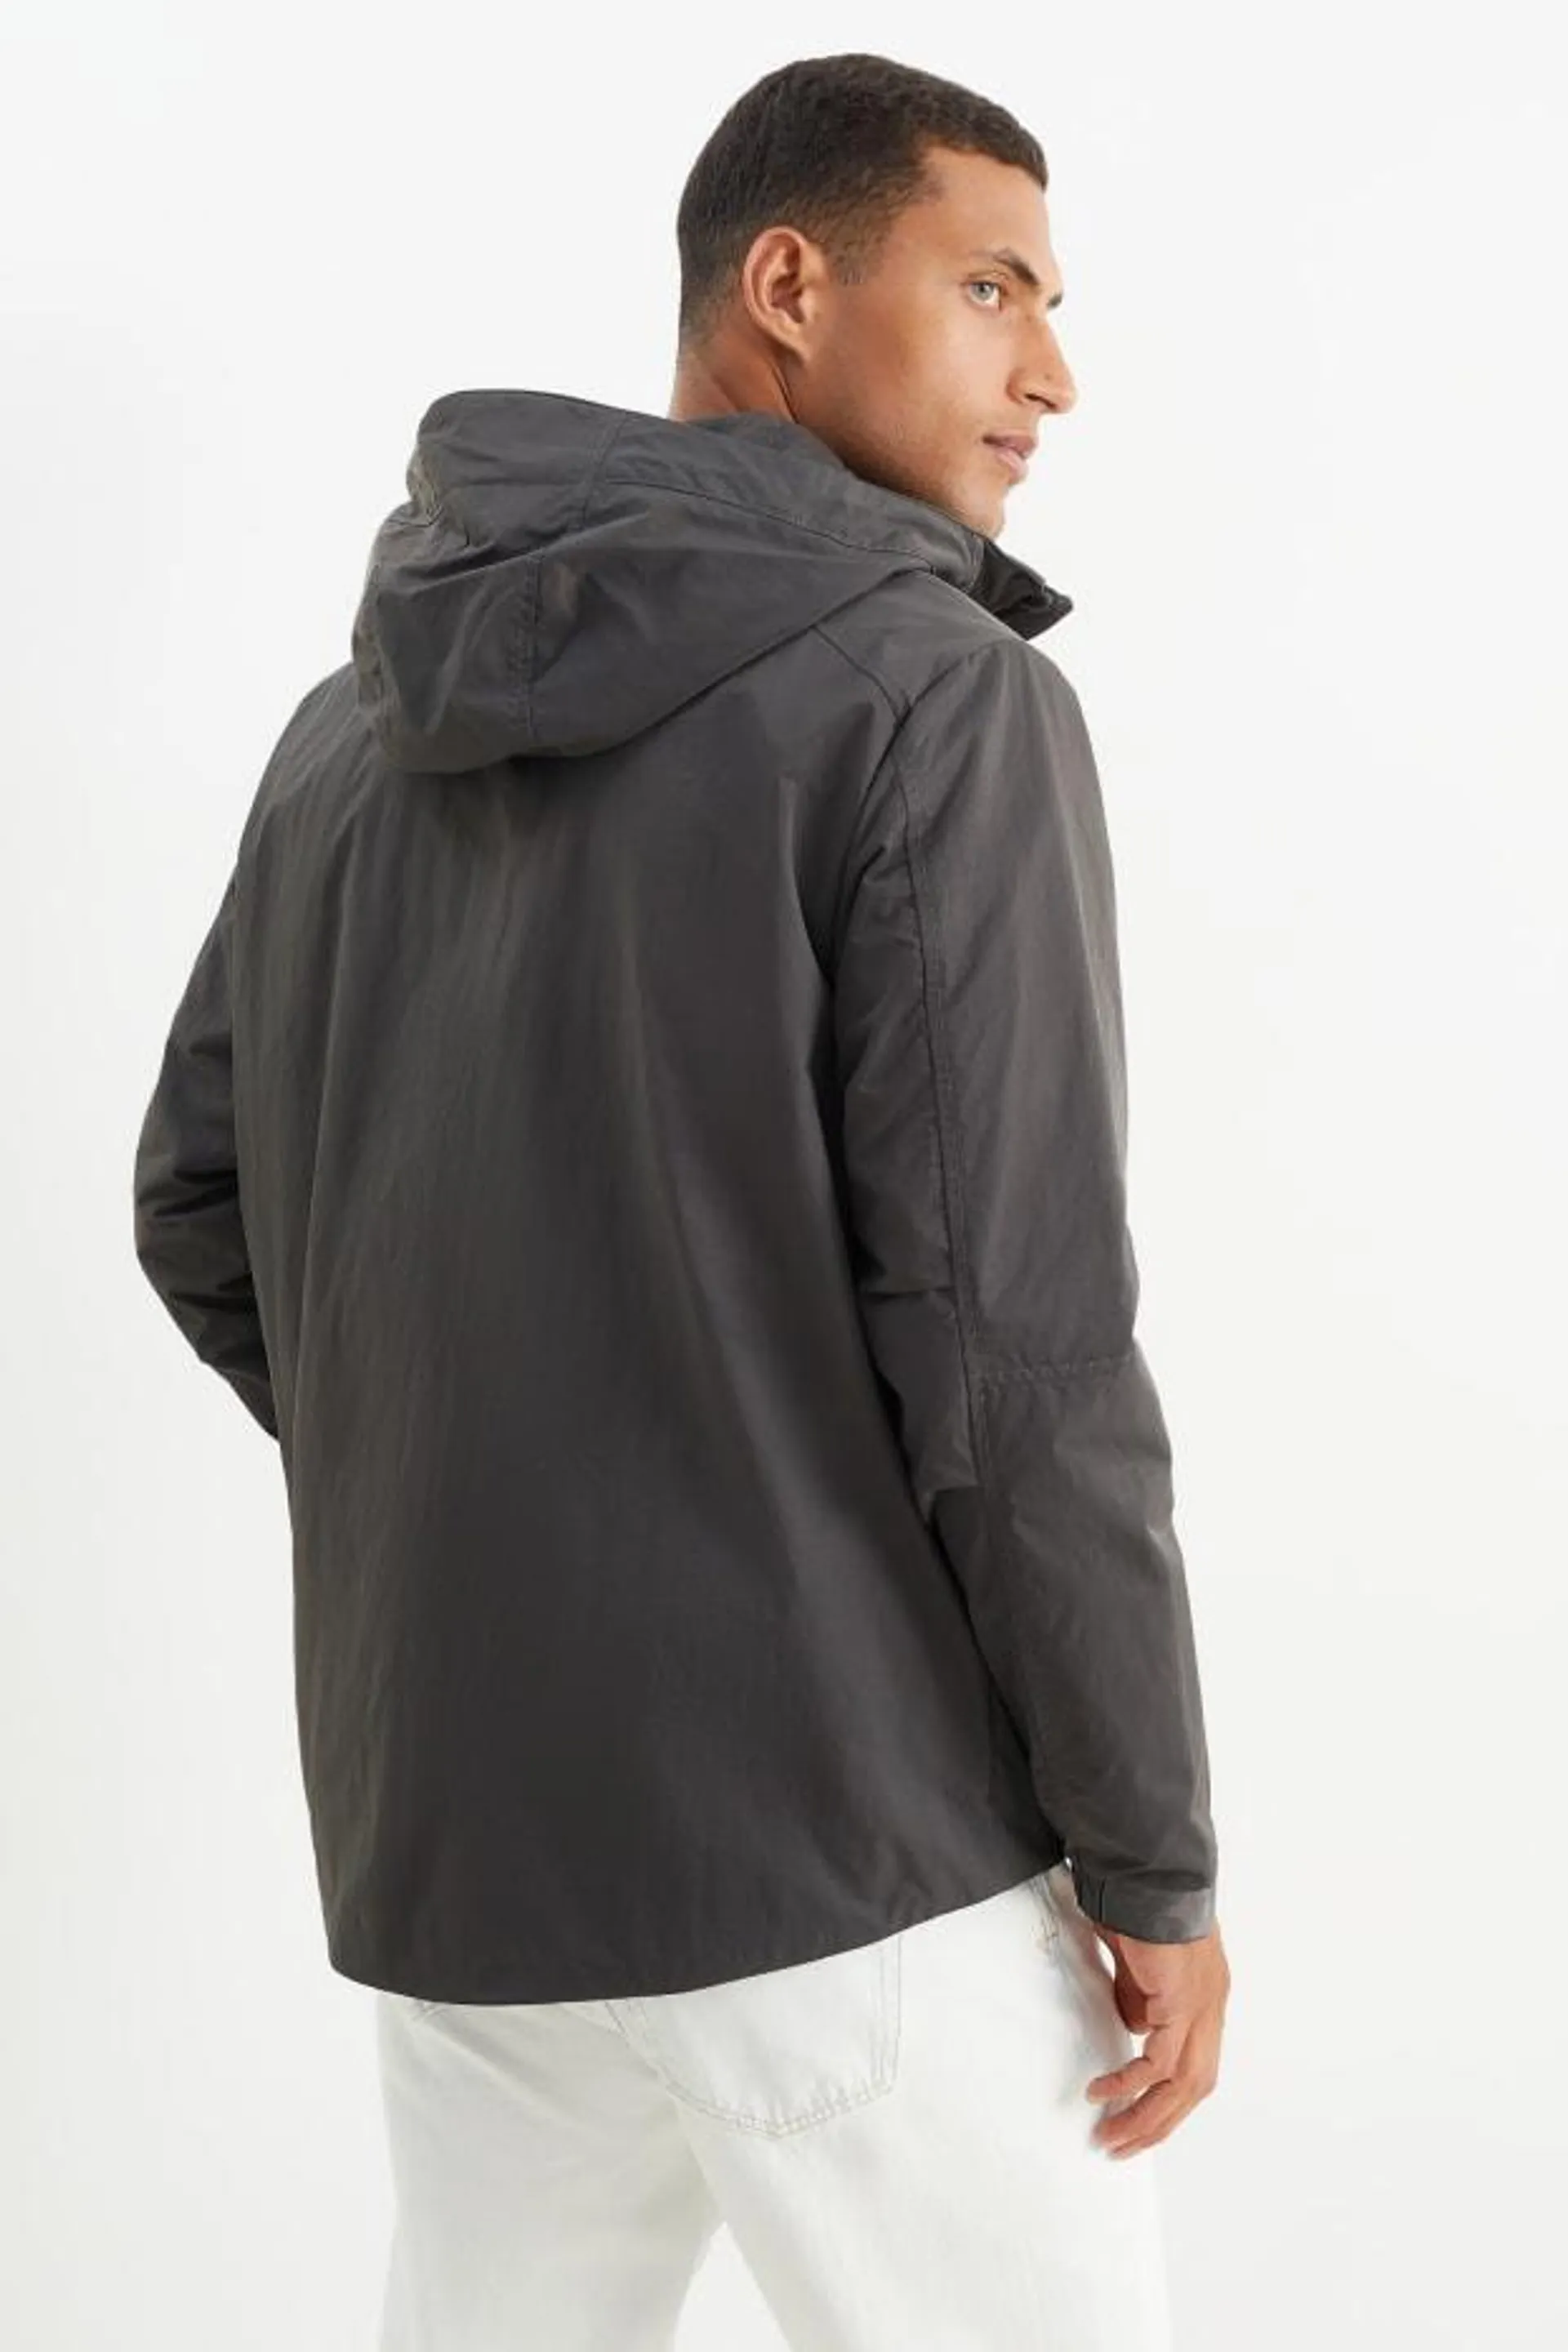 Jacket with hood - water-repellent